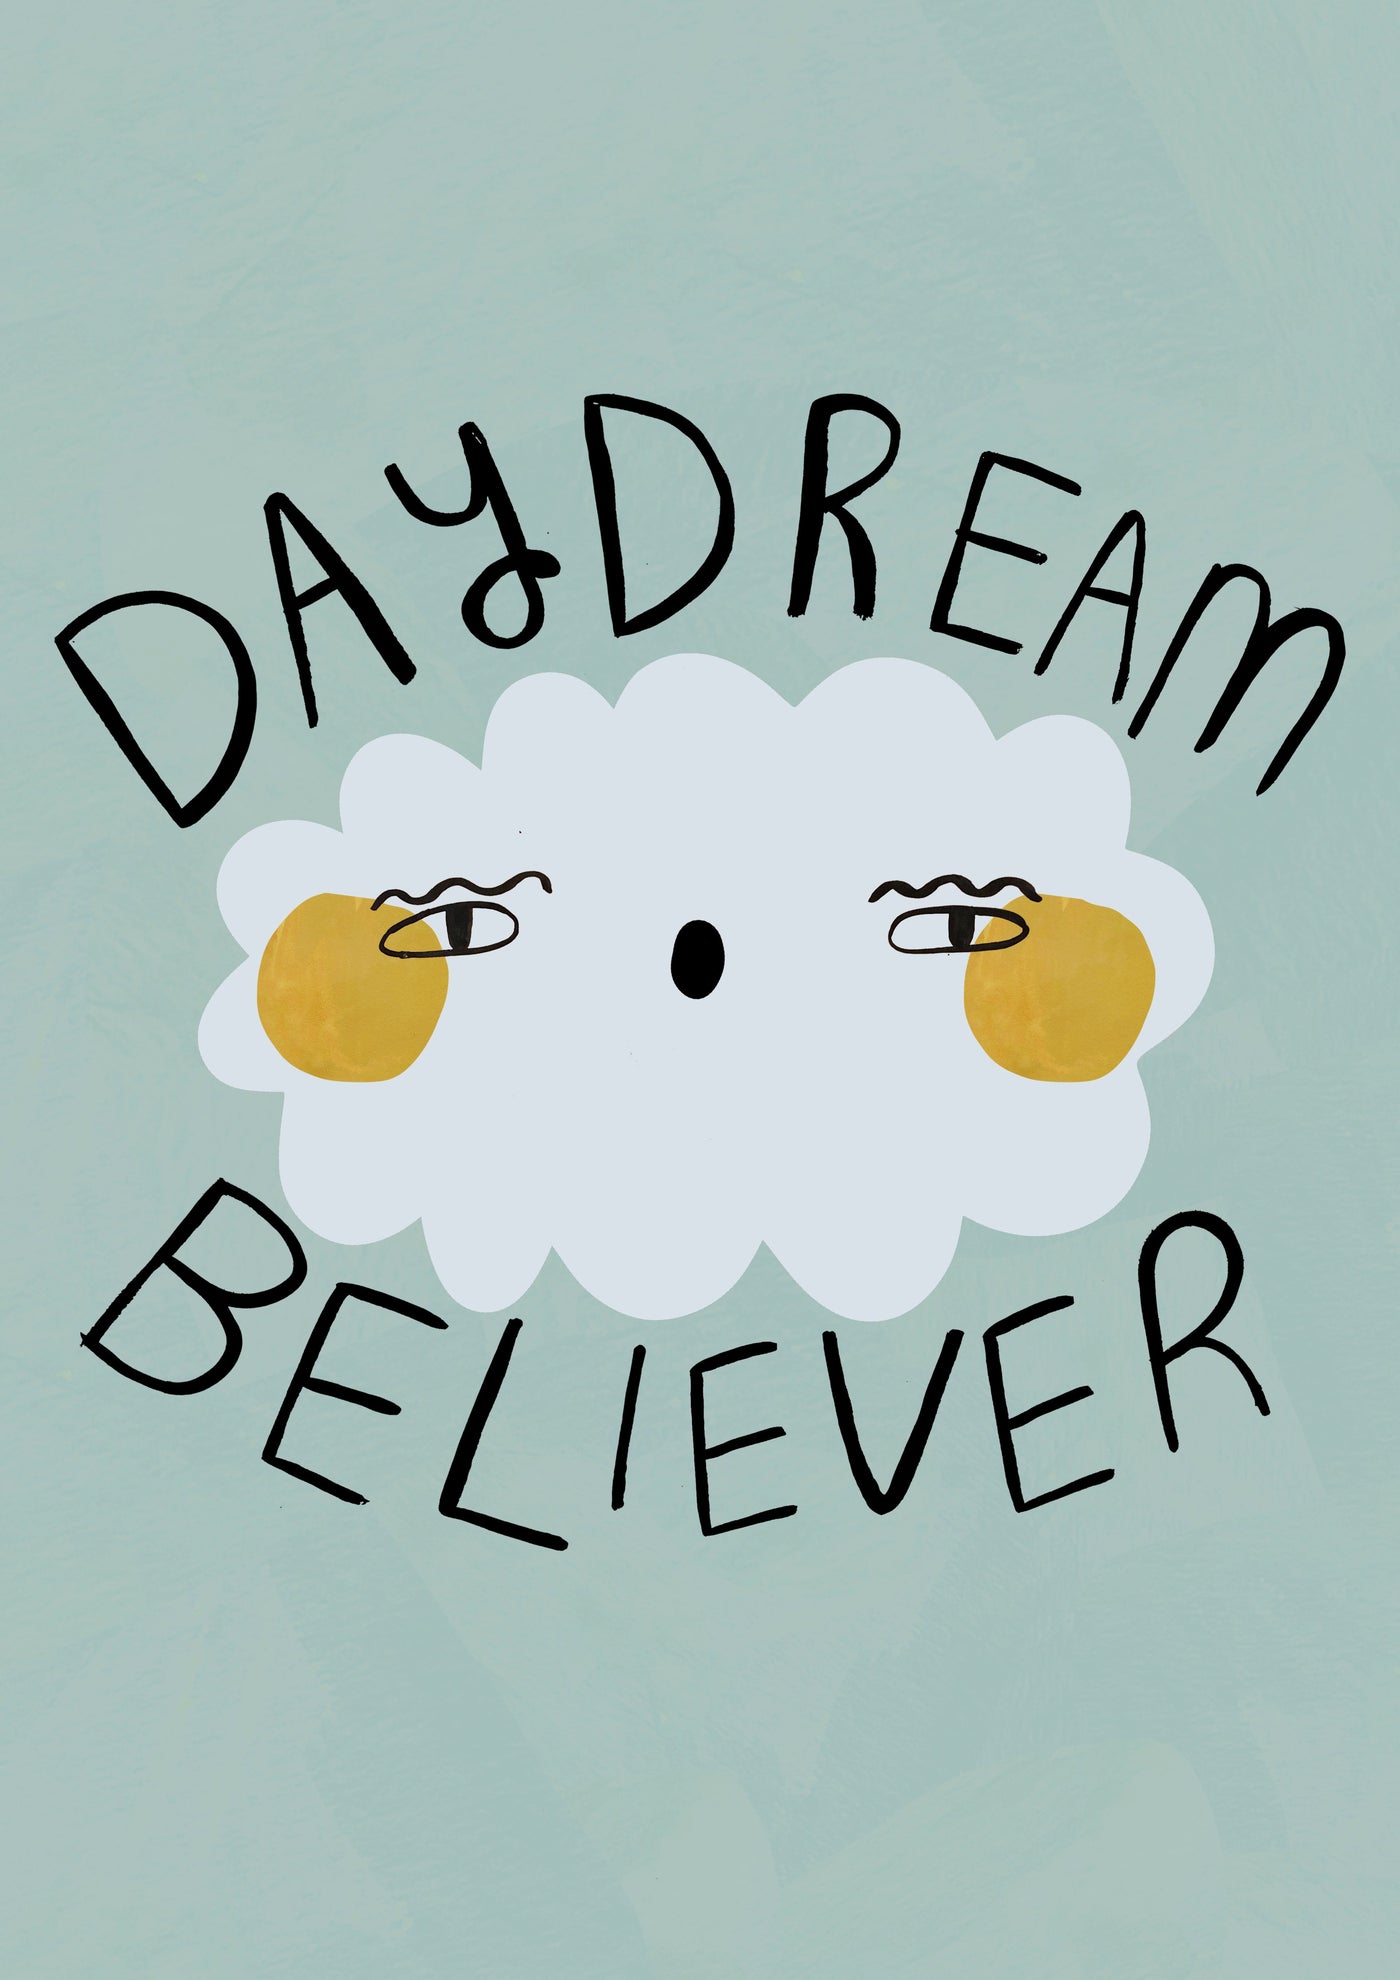 Daydream believer print